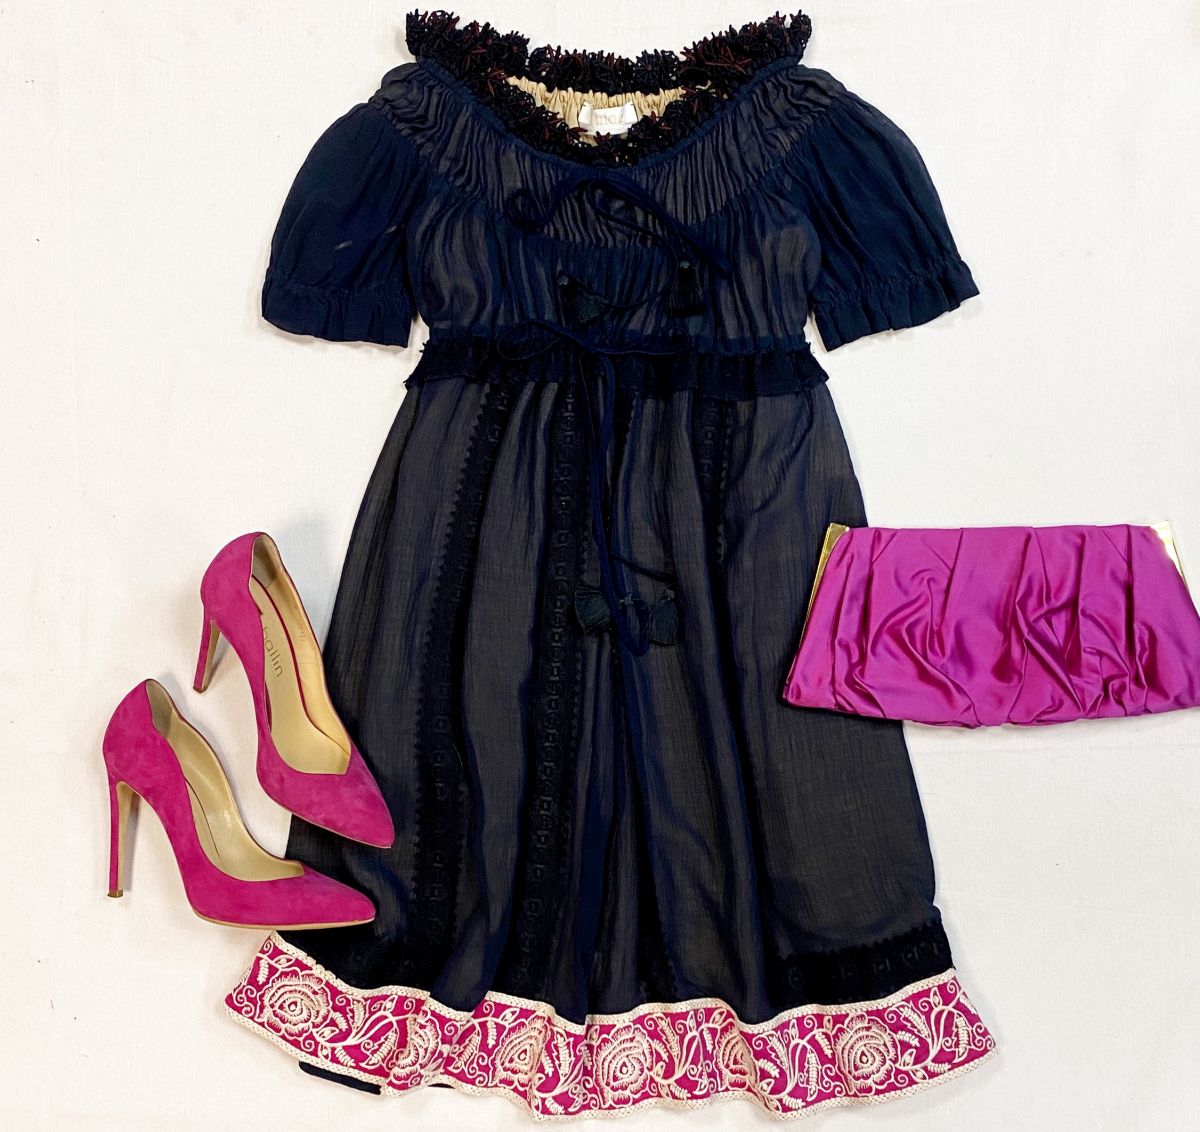 Платье Chloe размер 34 цена 15 385 руб
Туфли Ballin размер 38 цена 7 693 руб
Клатч Dolce Gabbana 